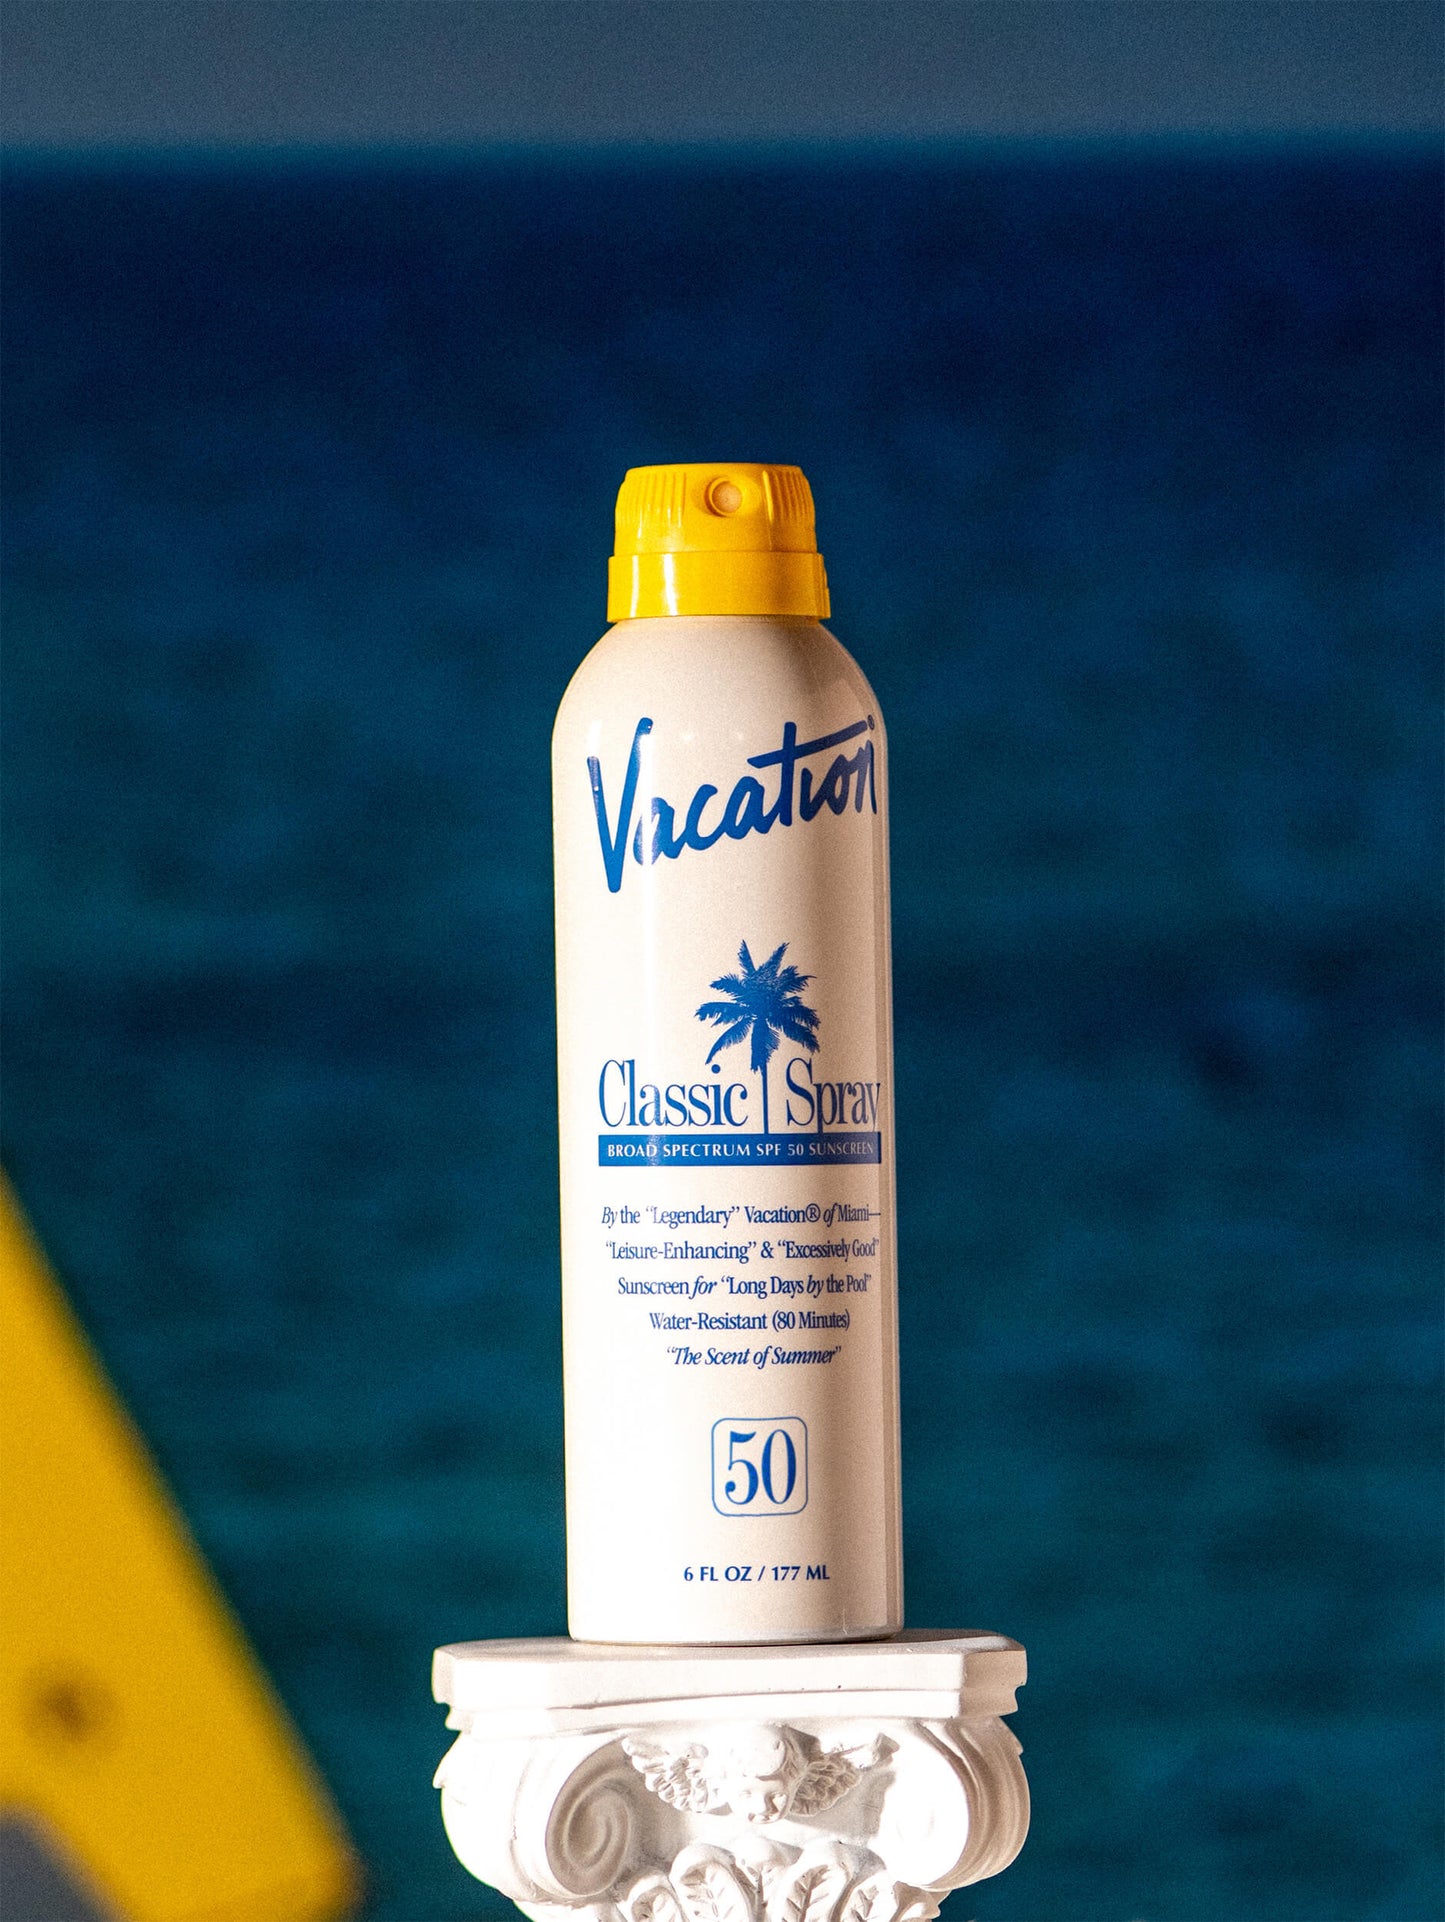 Vacation- SPF 50 Sunscreen Spray